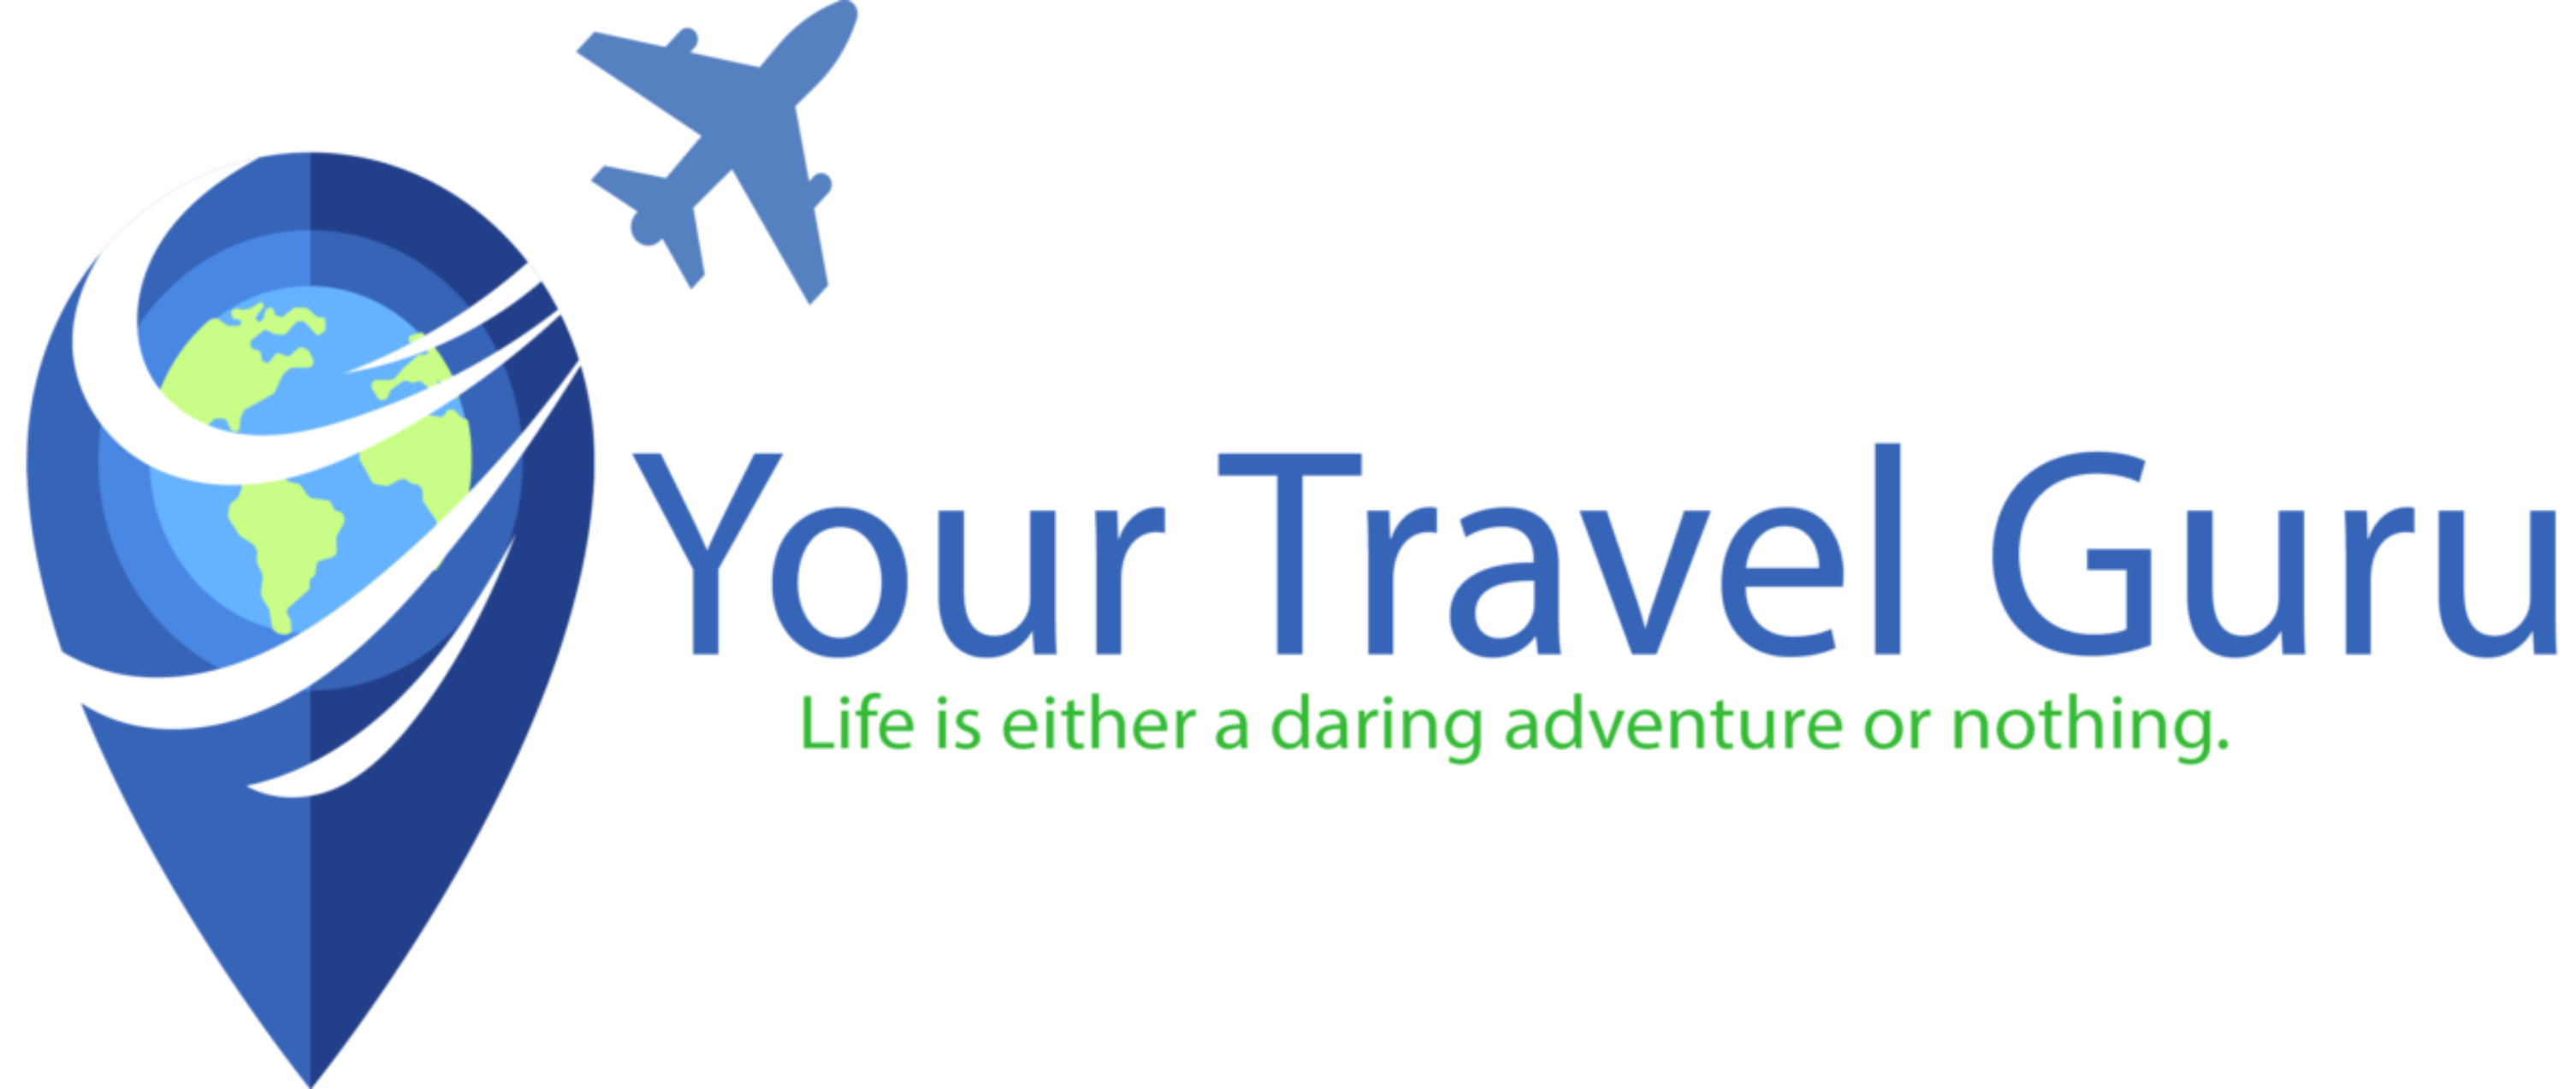 Your Travel Guru